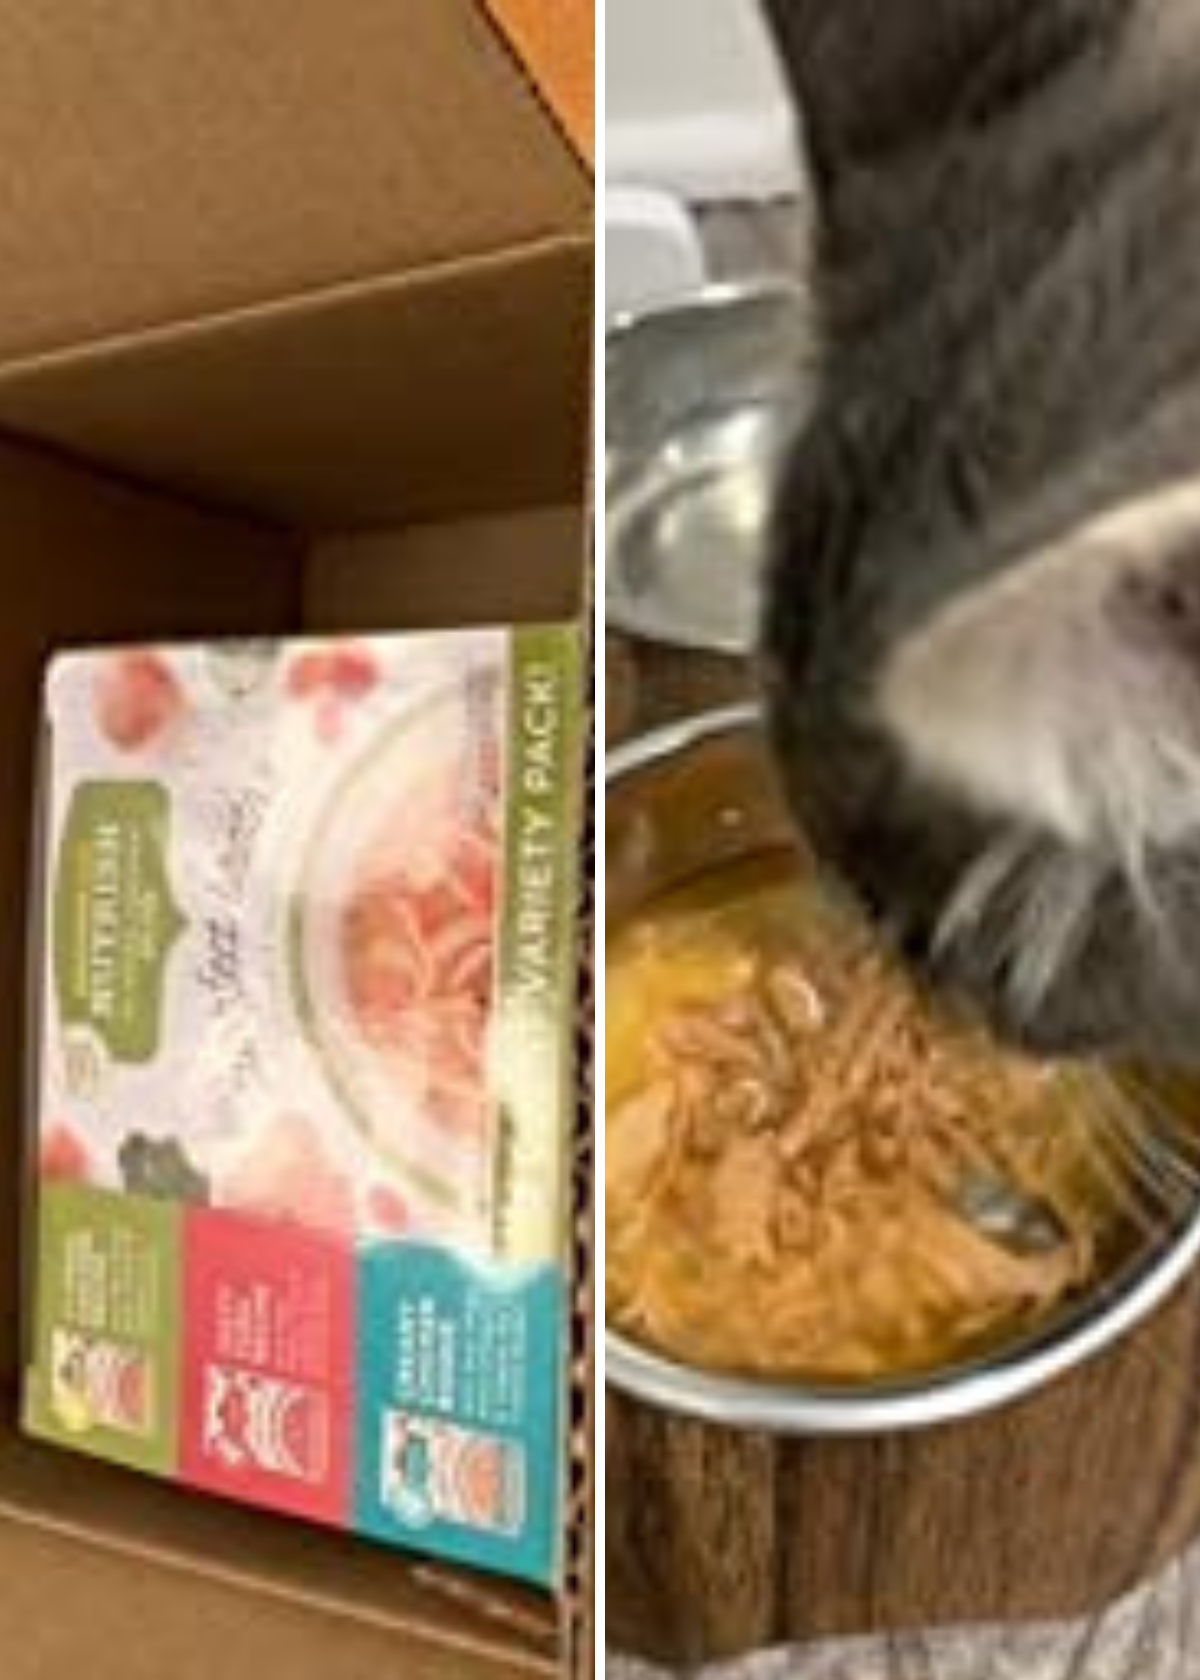 A Feline Frenzy: 5 Cat Food Broths Put to the Taste Test!